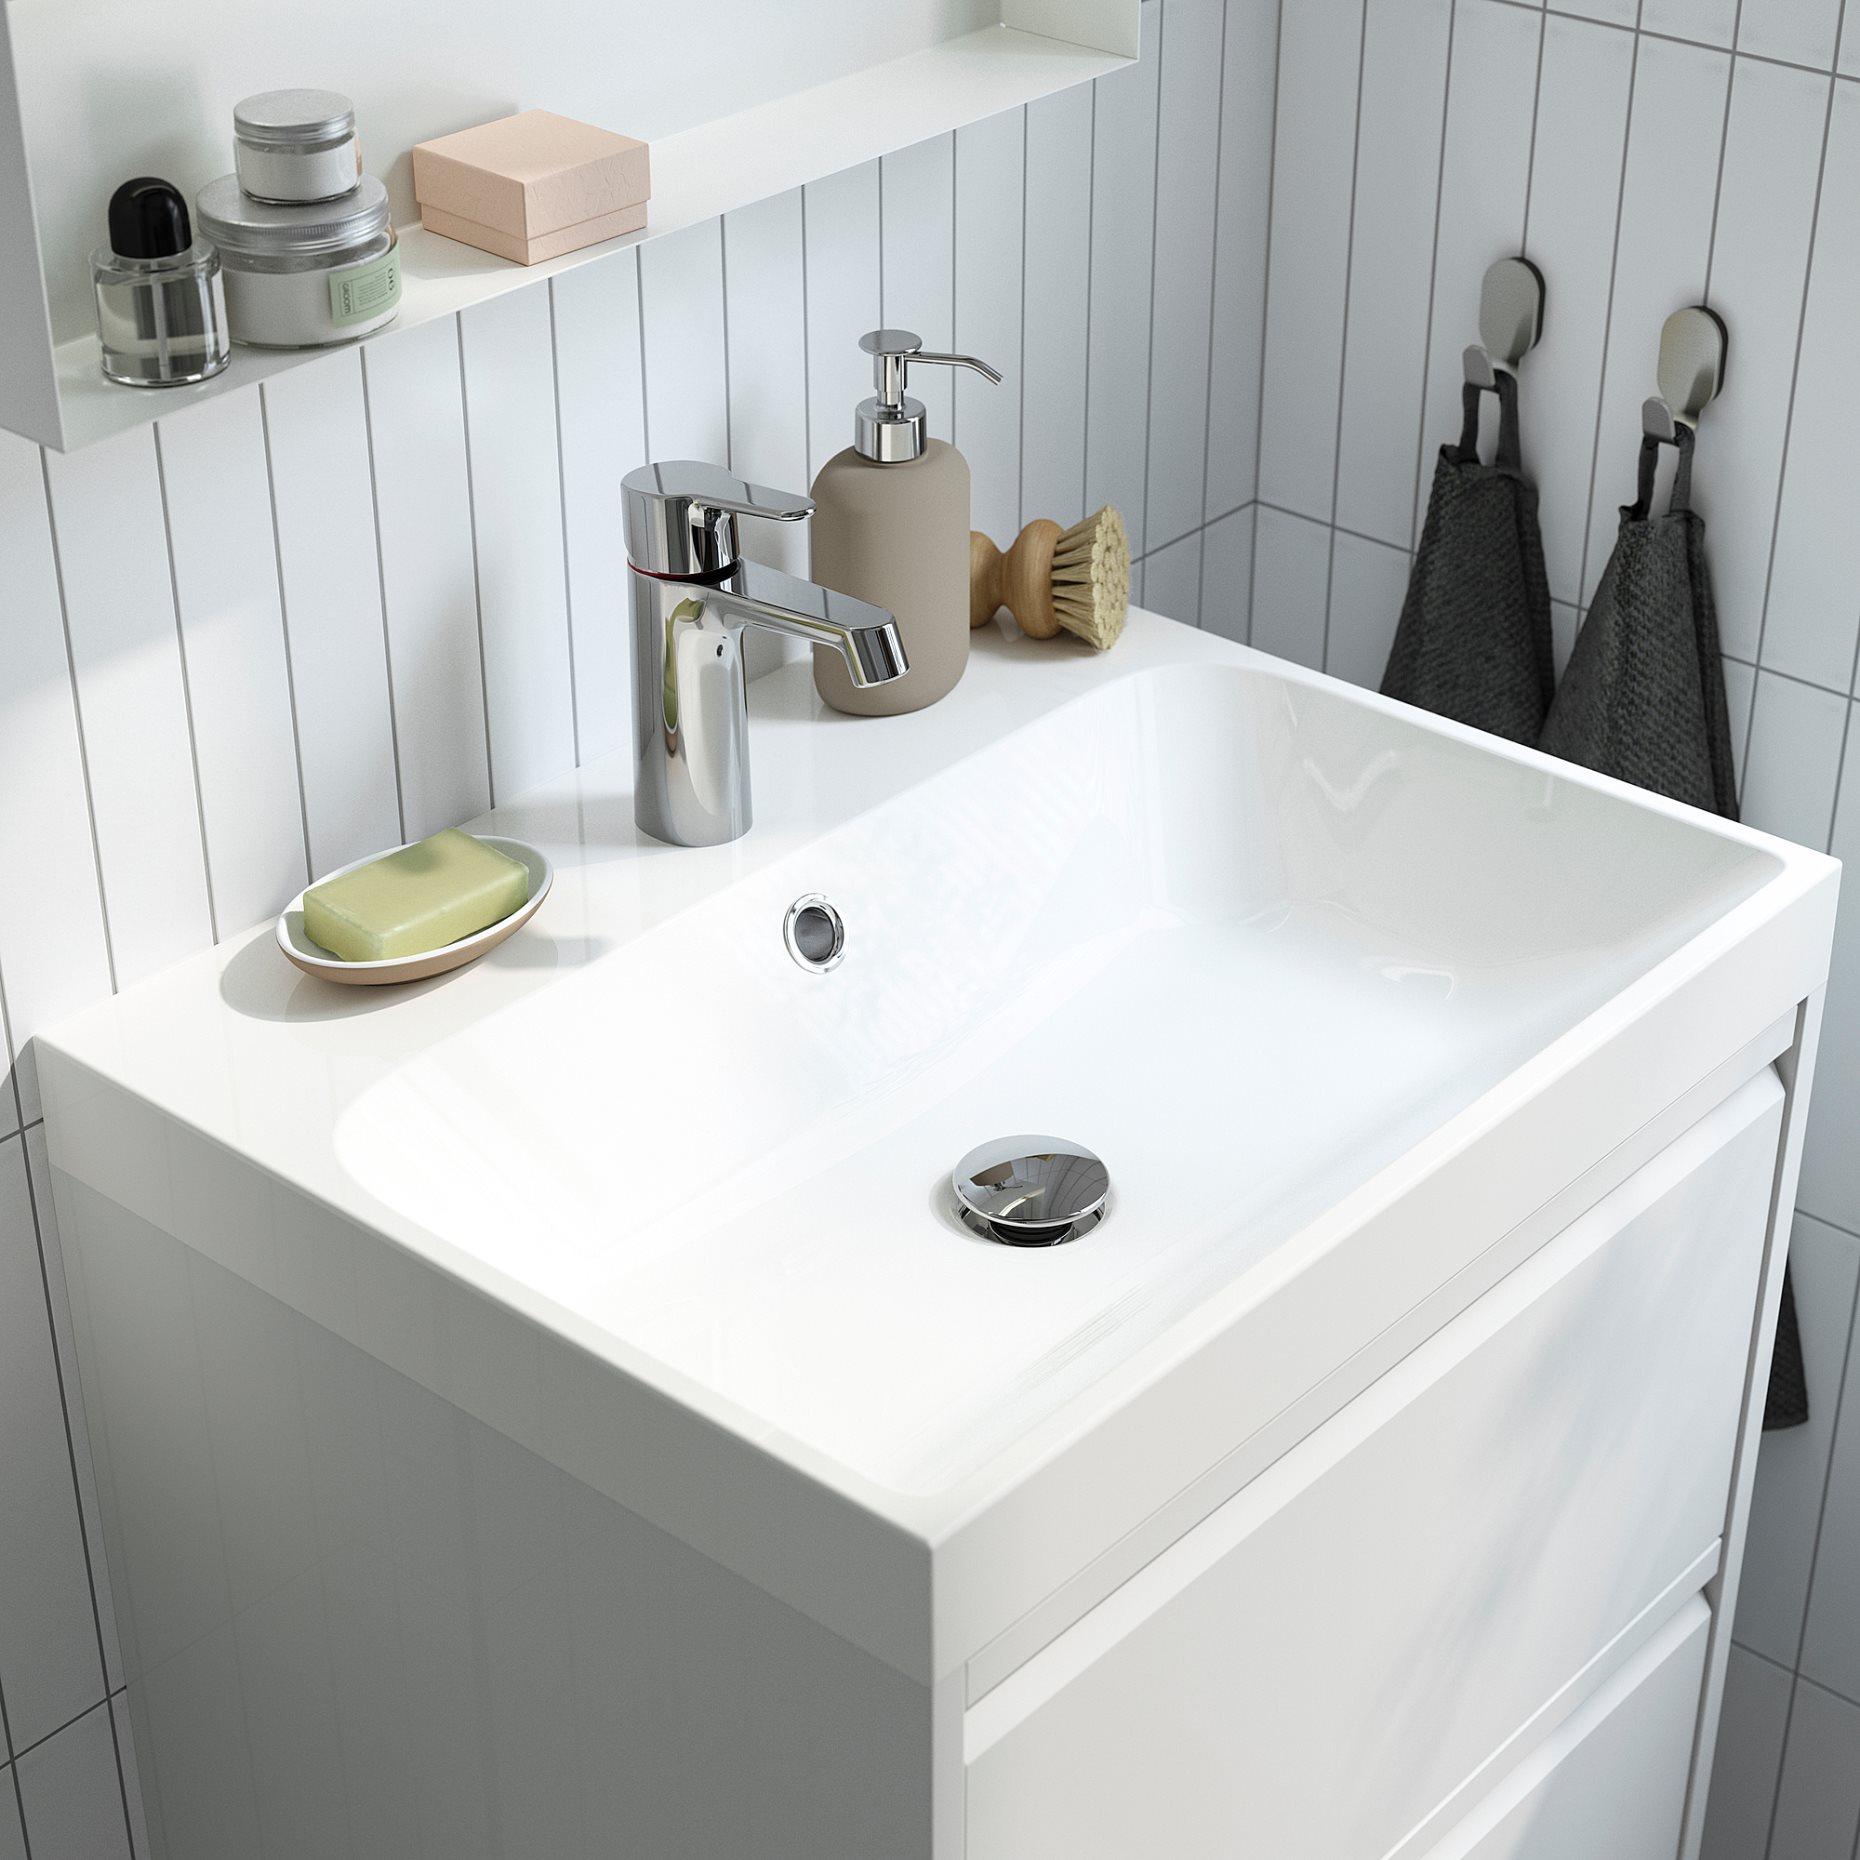 ANGSJON/BACKSJON, wash-stand with drawer/wash-basin/tap, 60x48x39 cm, 495.140.22